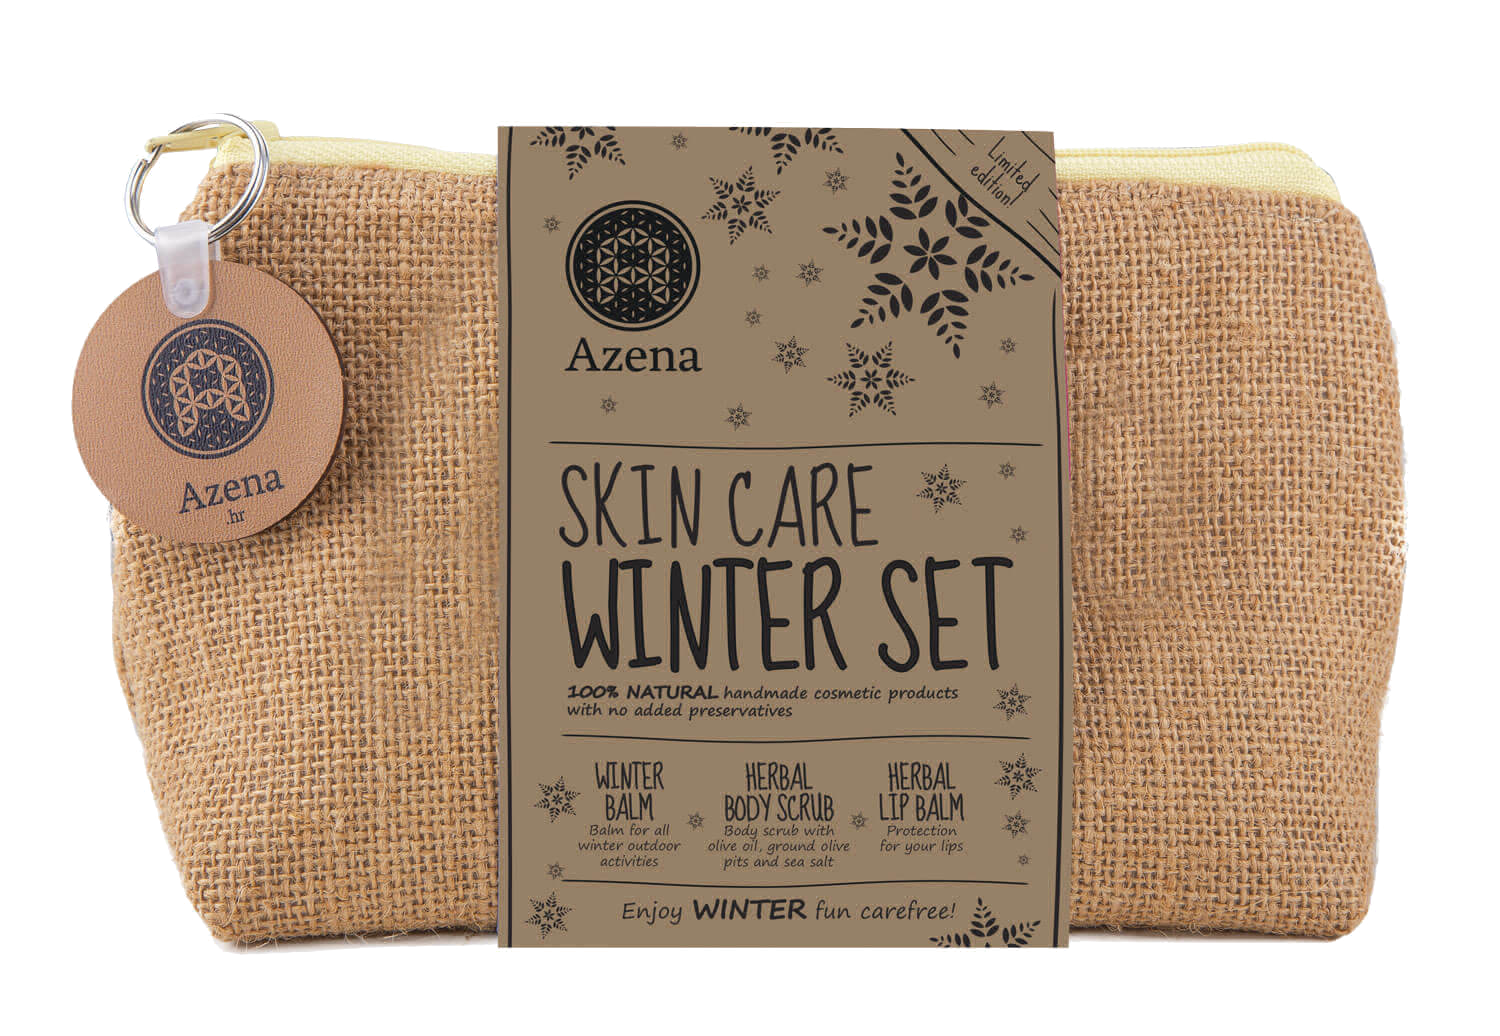 Winter skin care set